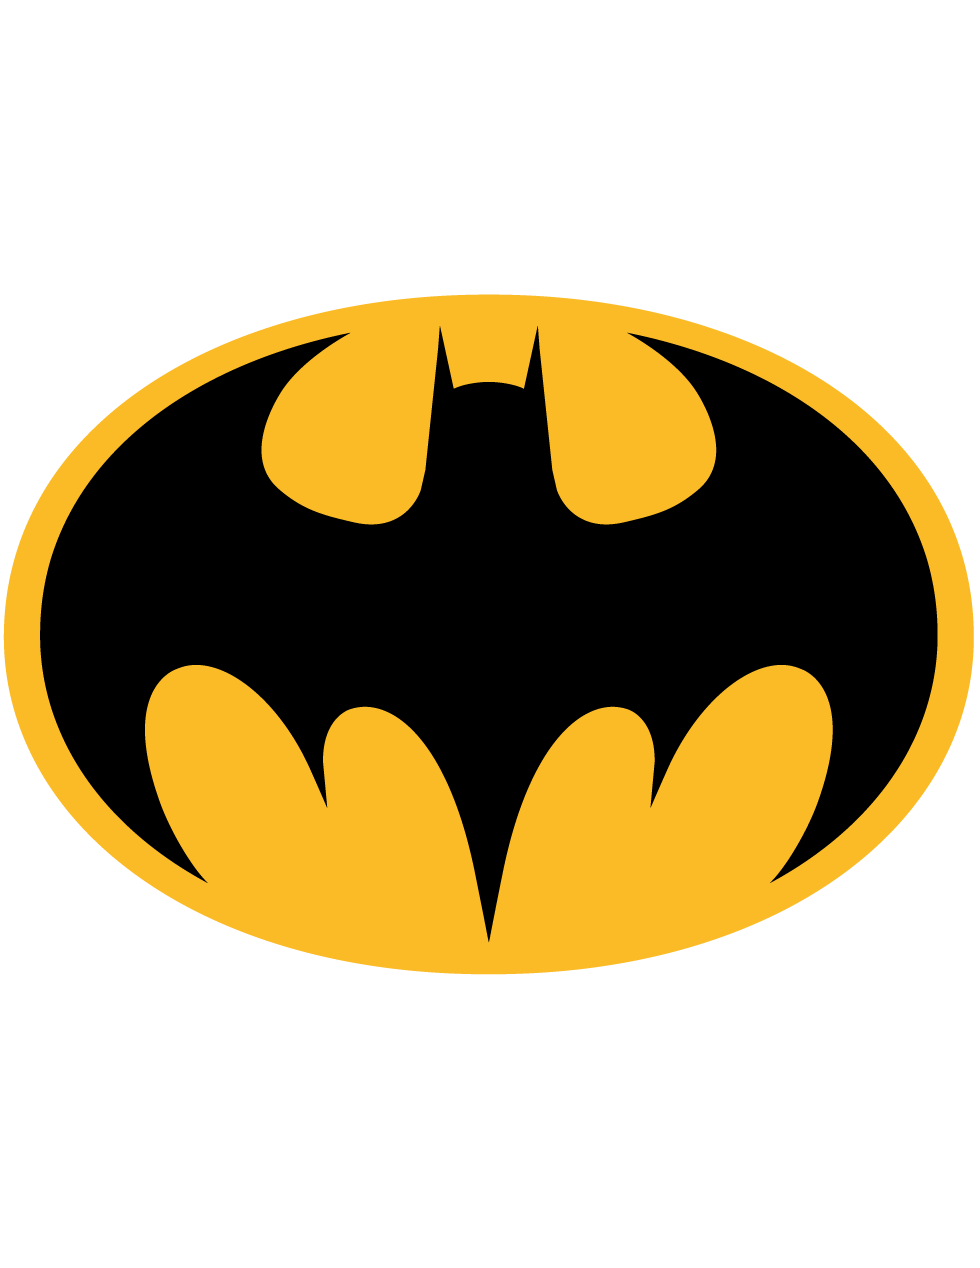 Batman Logo PNG Isolated Image